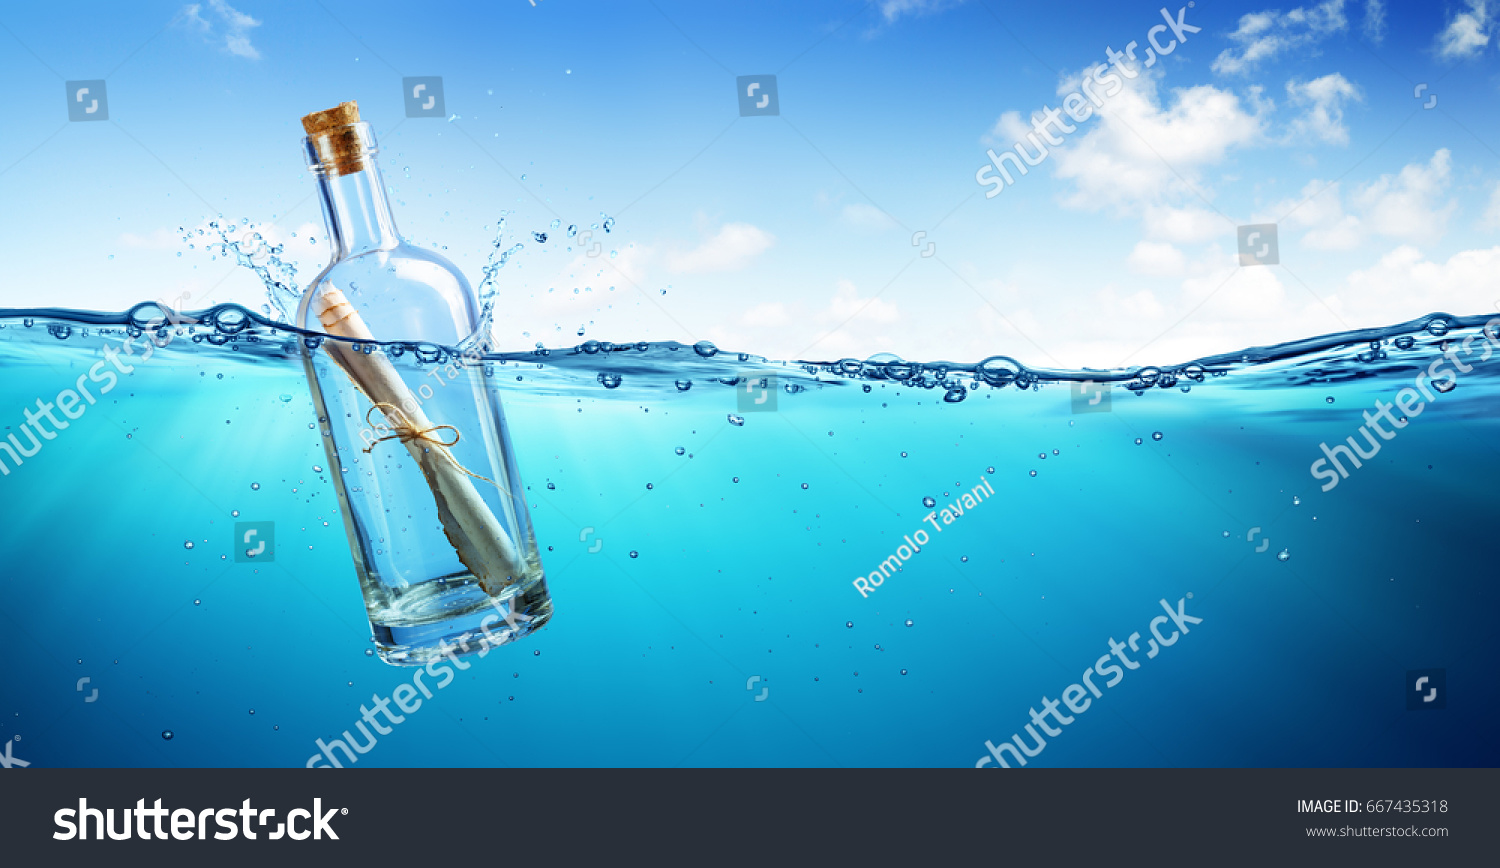 Message In Bottle floating In The Ocean
 #667435318